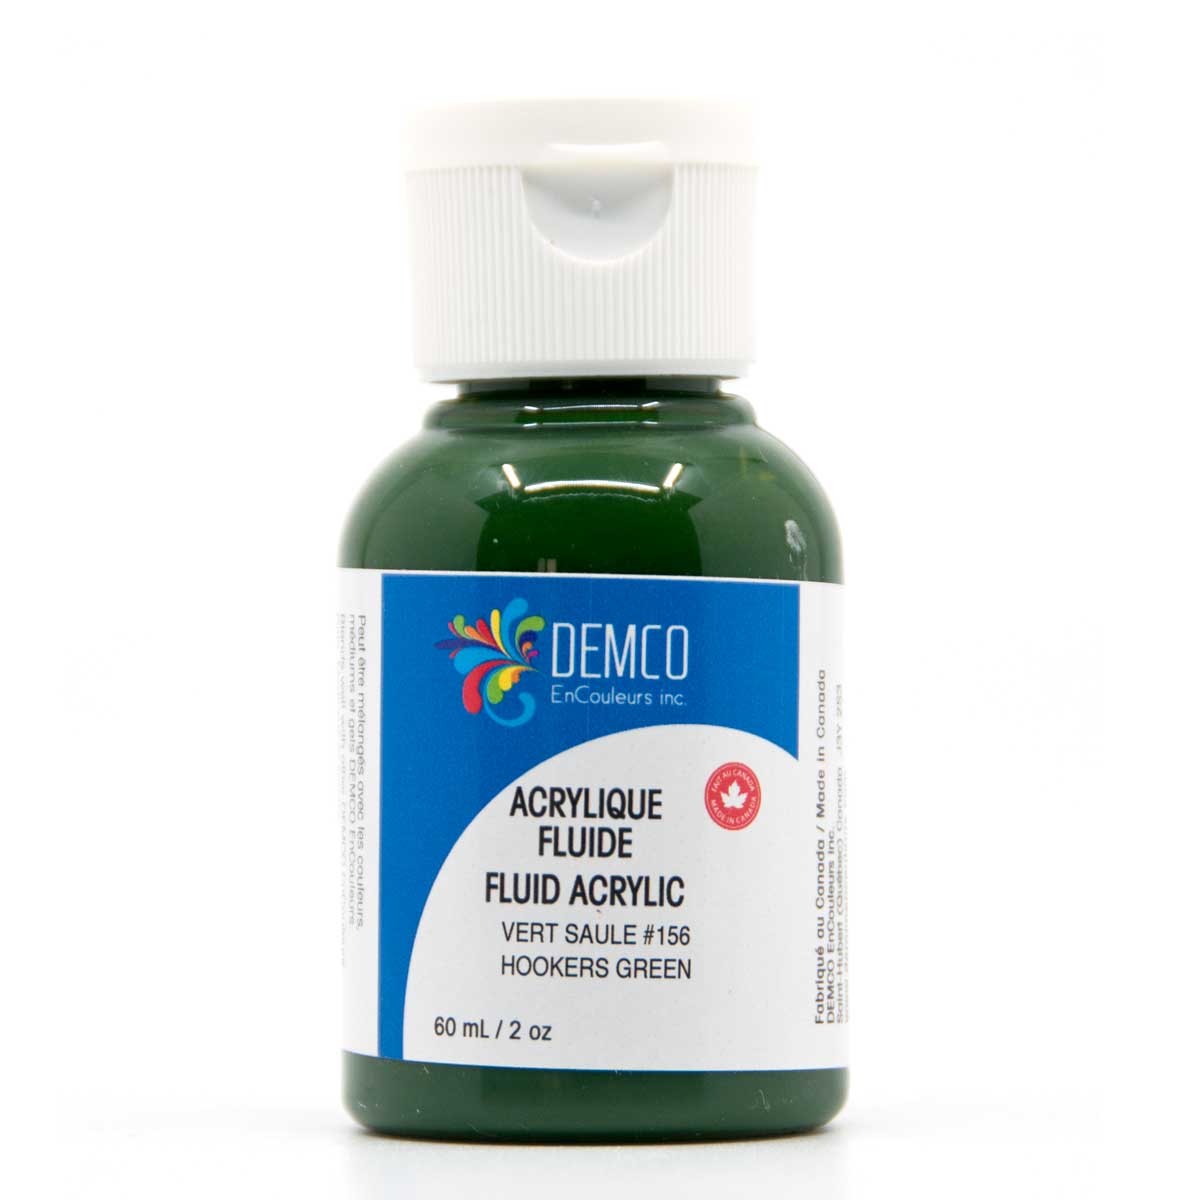 Demco Fluid Acrylic Paint - Hooker's Green (Hue) 60 ml